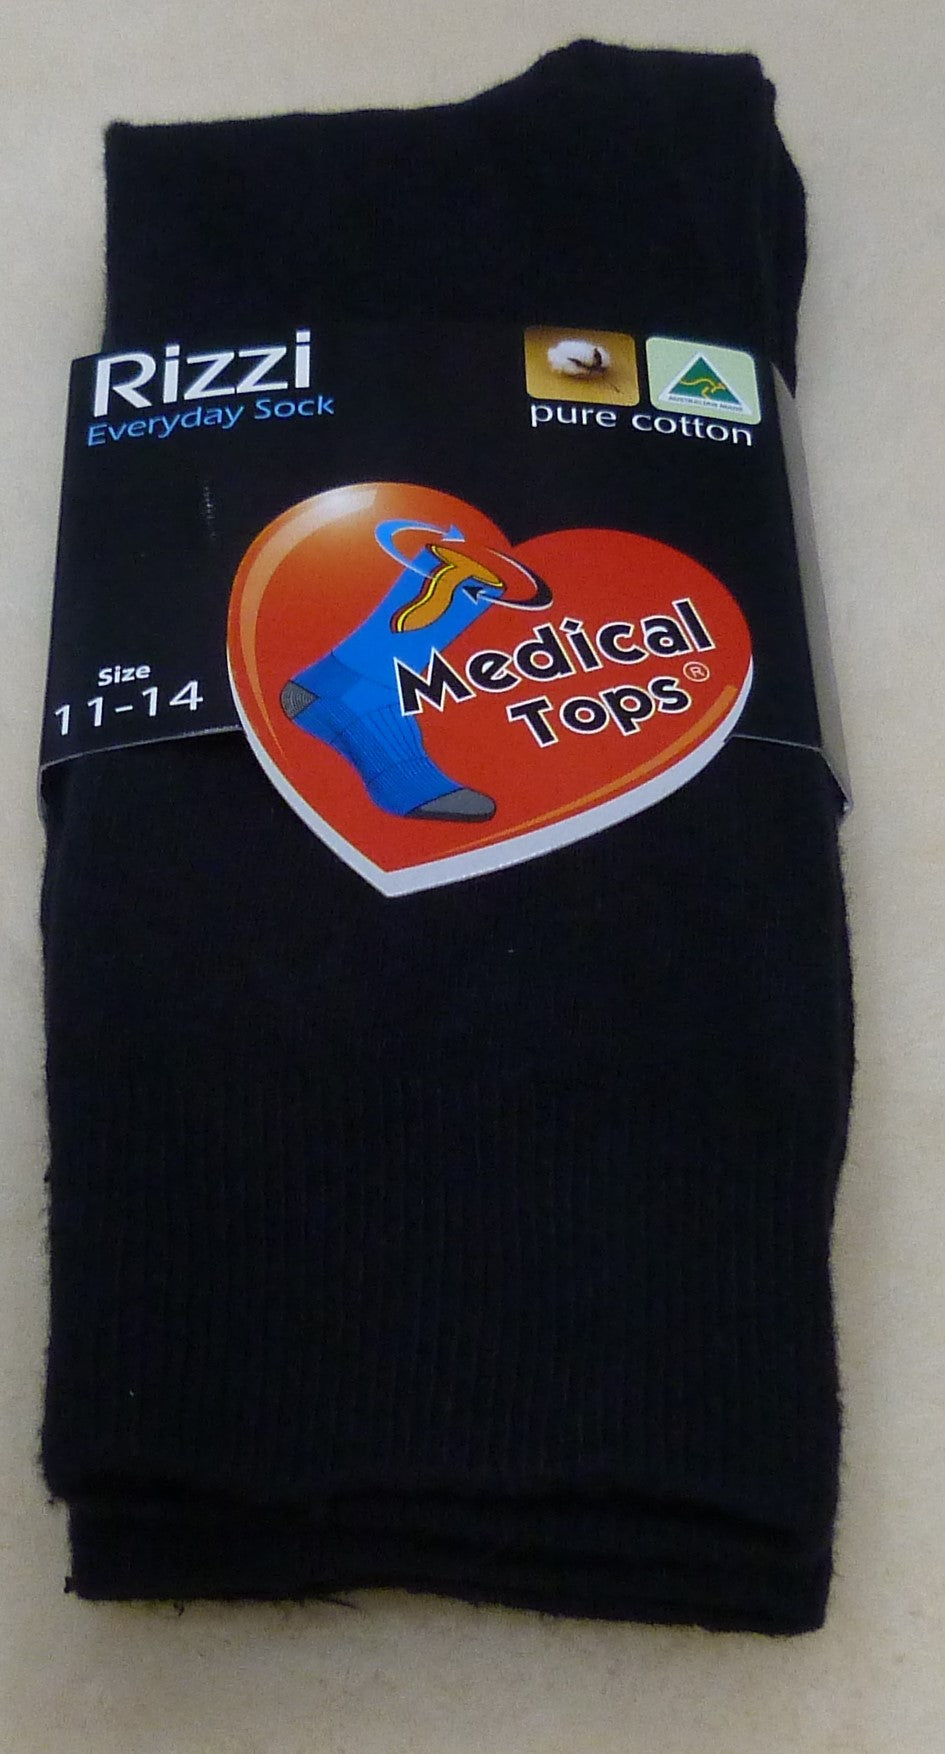 Cotton Socks (Medical Dress) x 1 pair